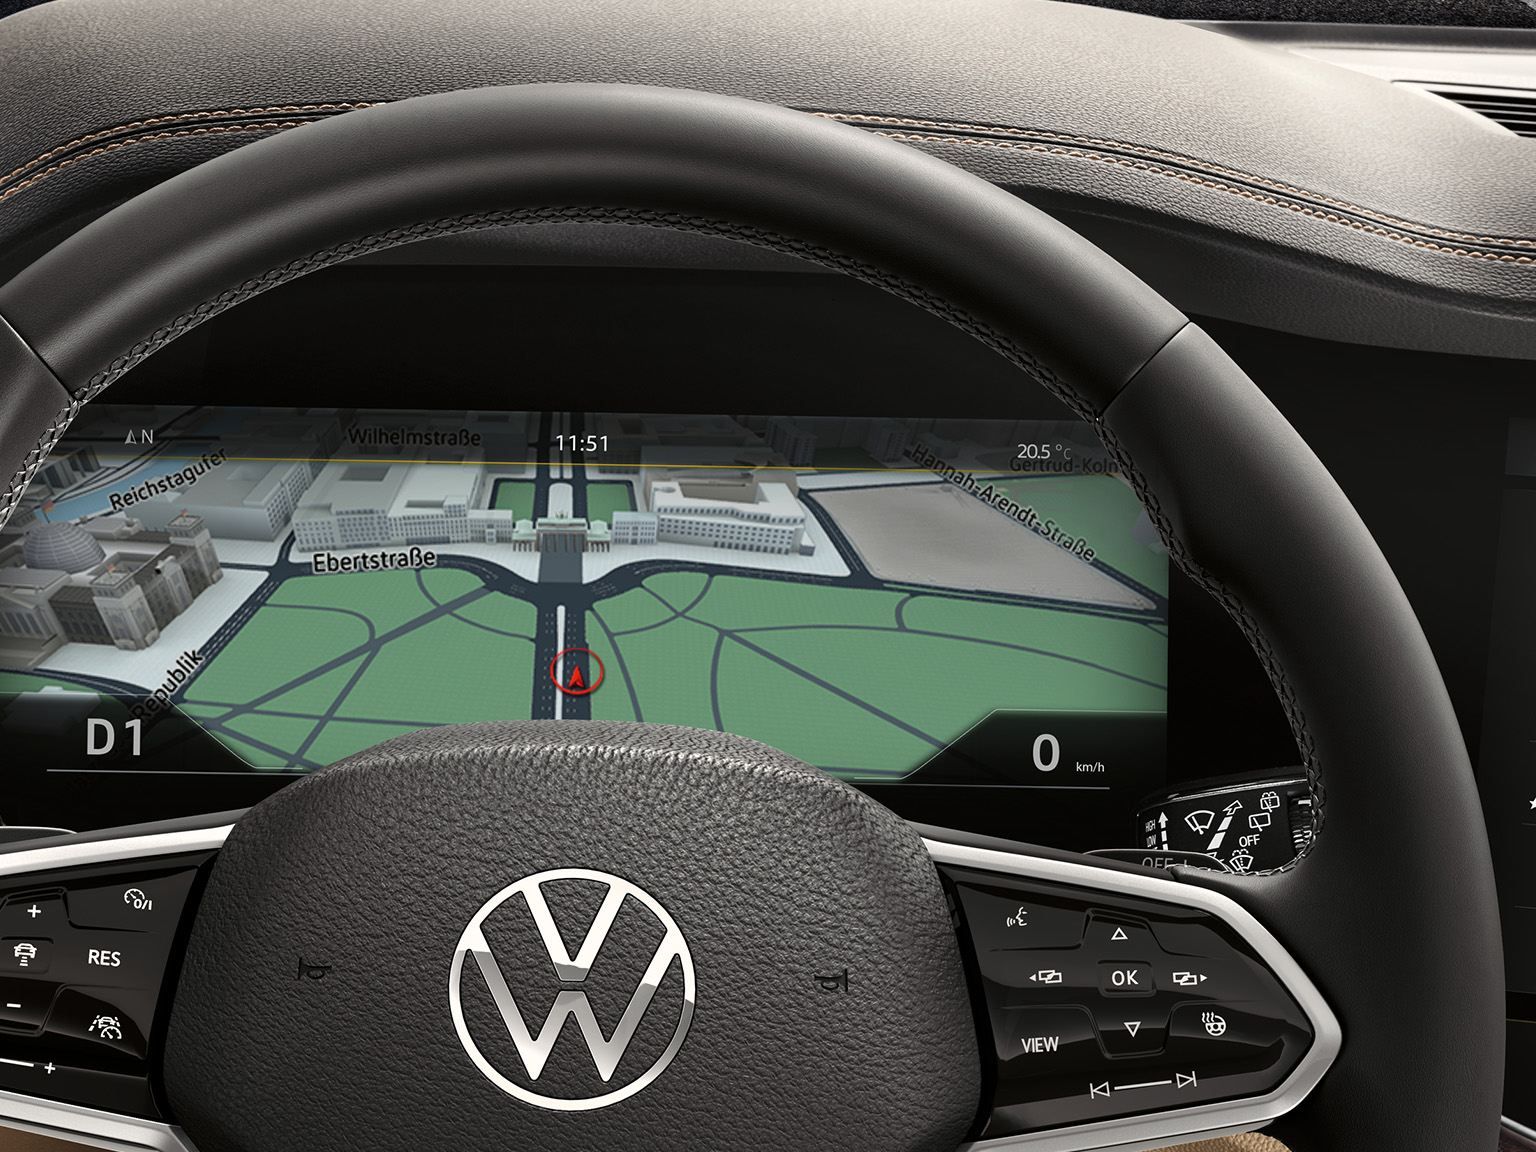 VW Touareg Digital Cockpit Navigation